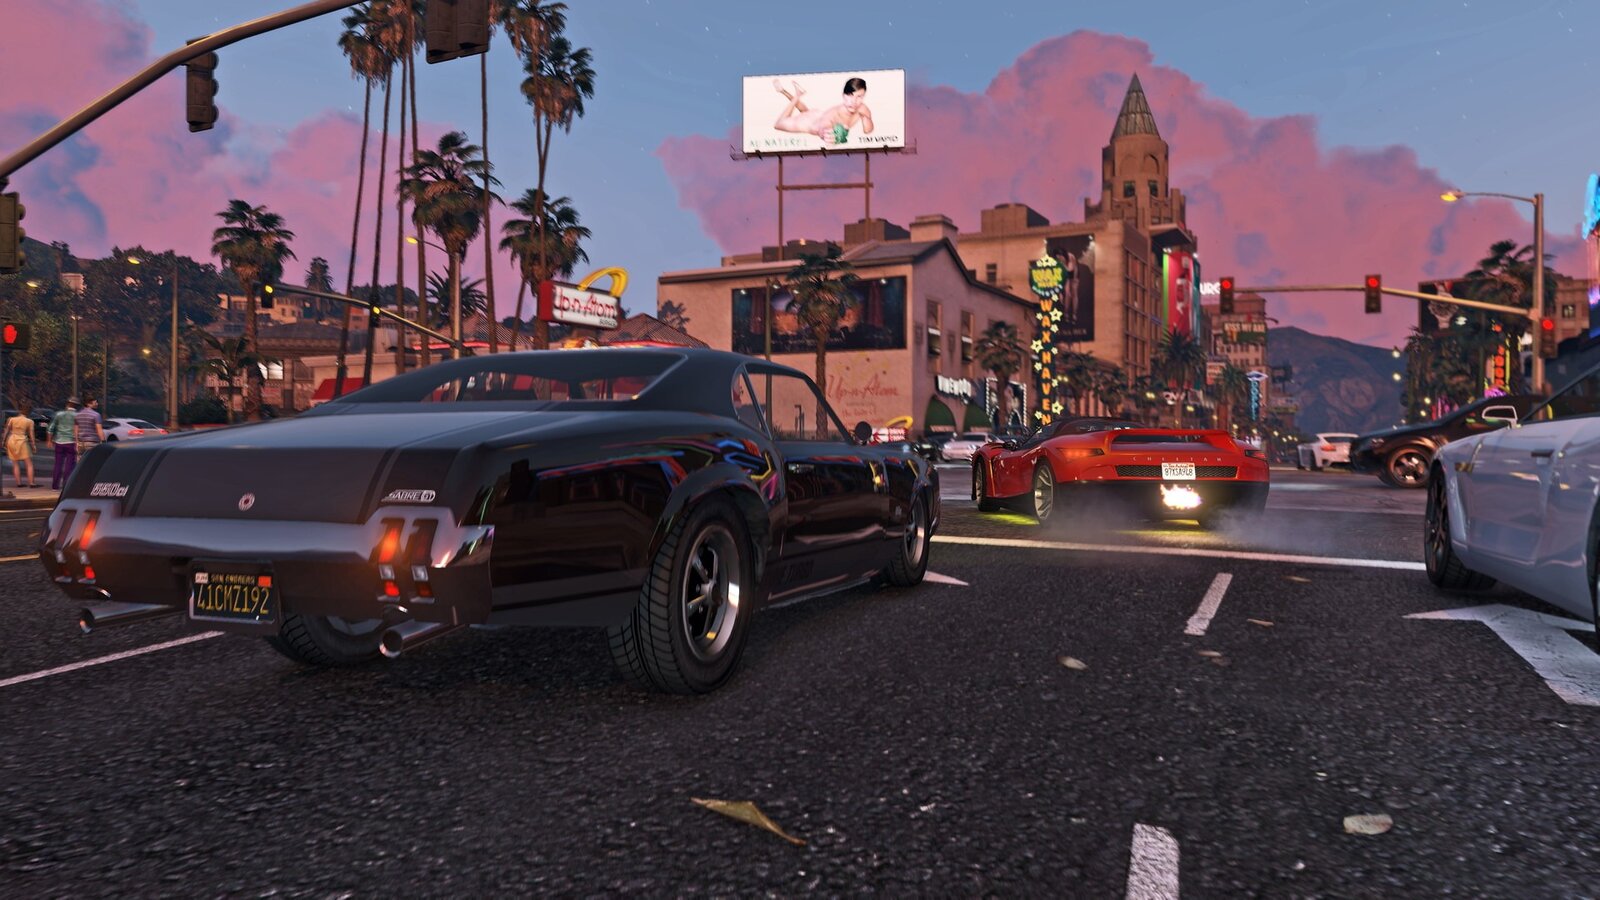 Grand Theft Auto V: Premium Online Edition & Megalodon Shark Card Bundle